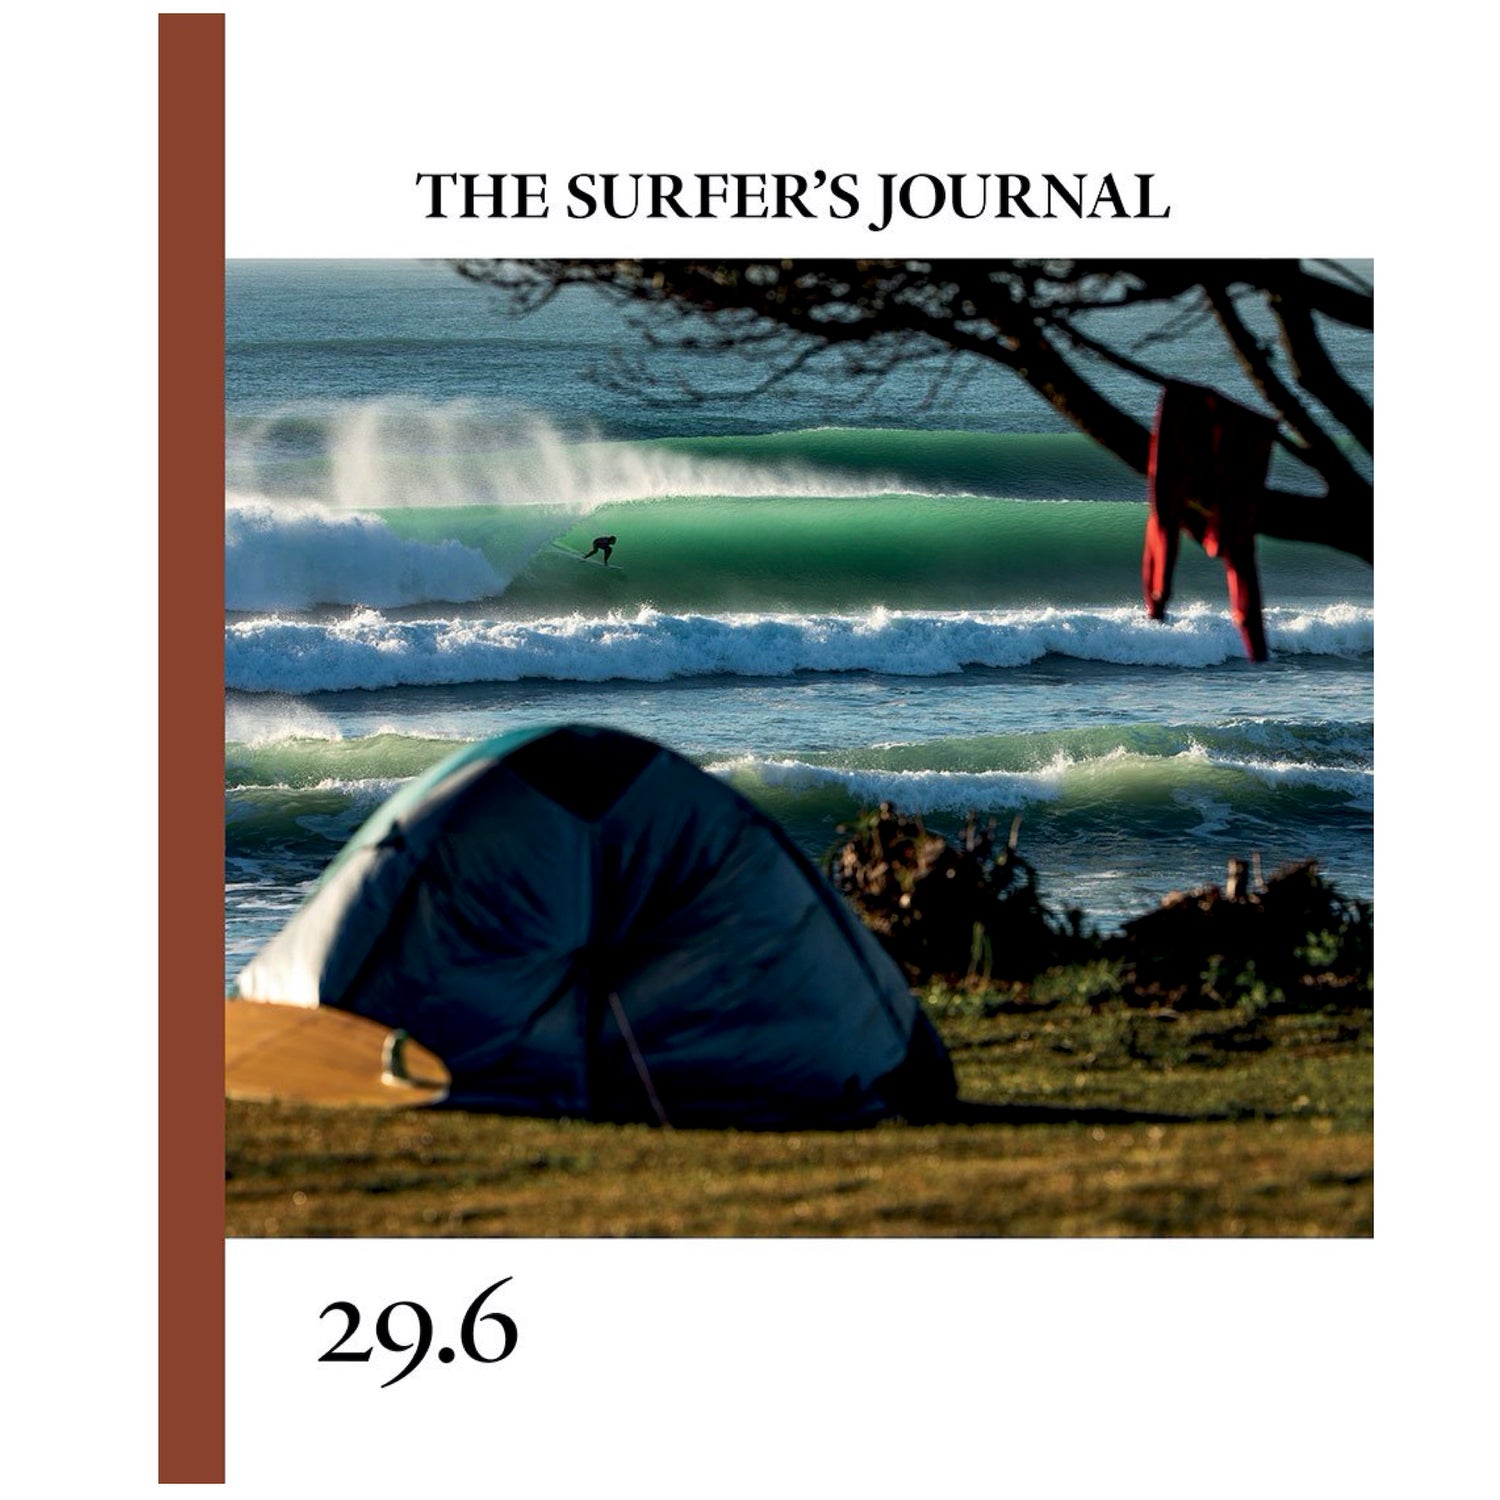 THE SURFER'S JOURNAL 29.6 - REBEL FIN CO.